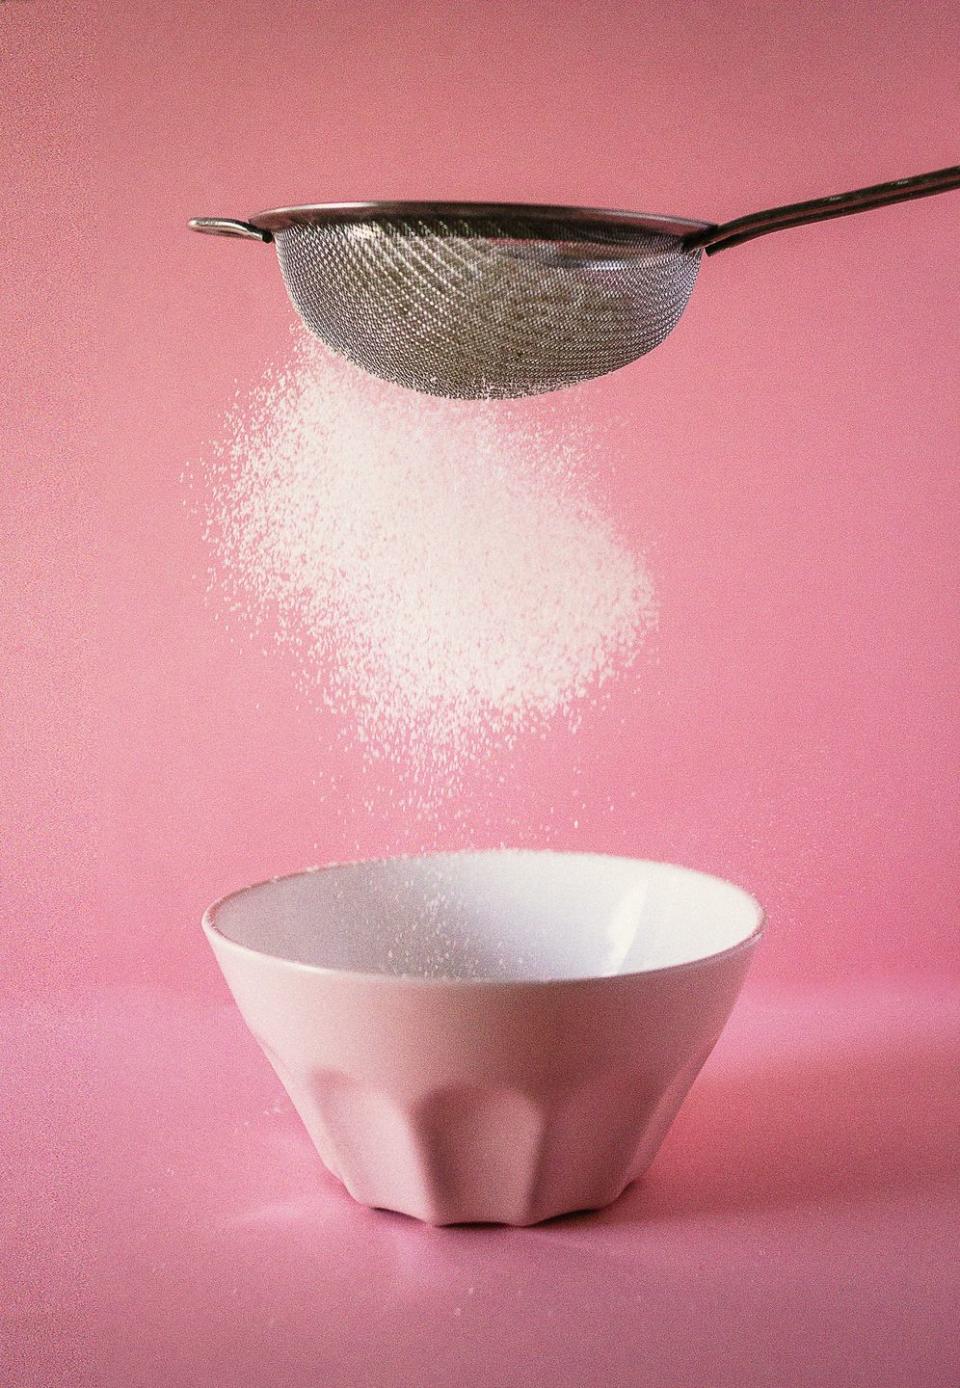 6) How To Freeze Flour